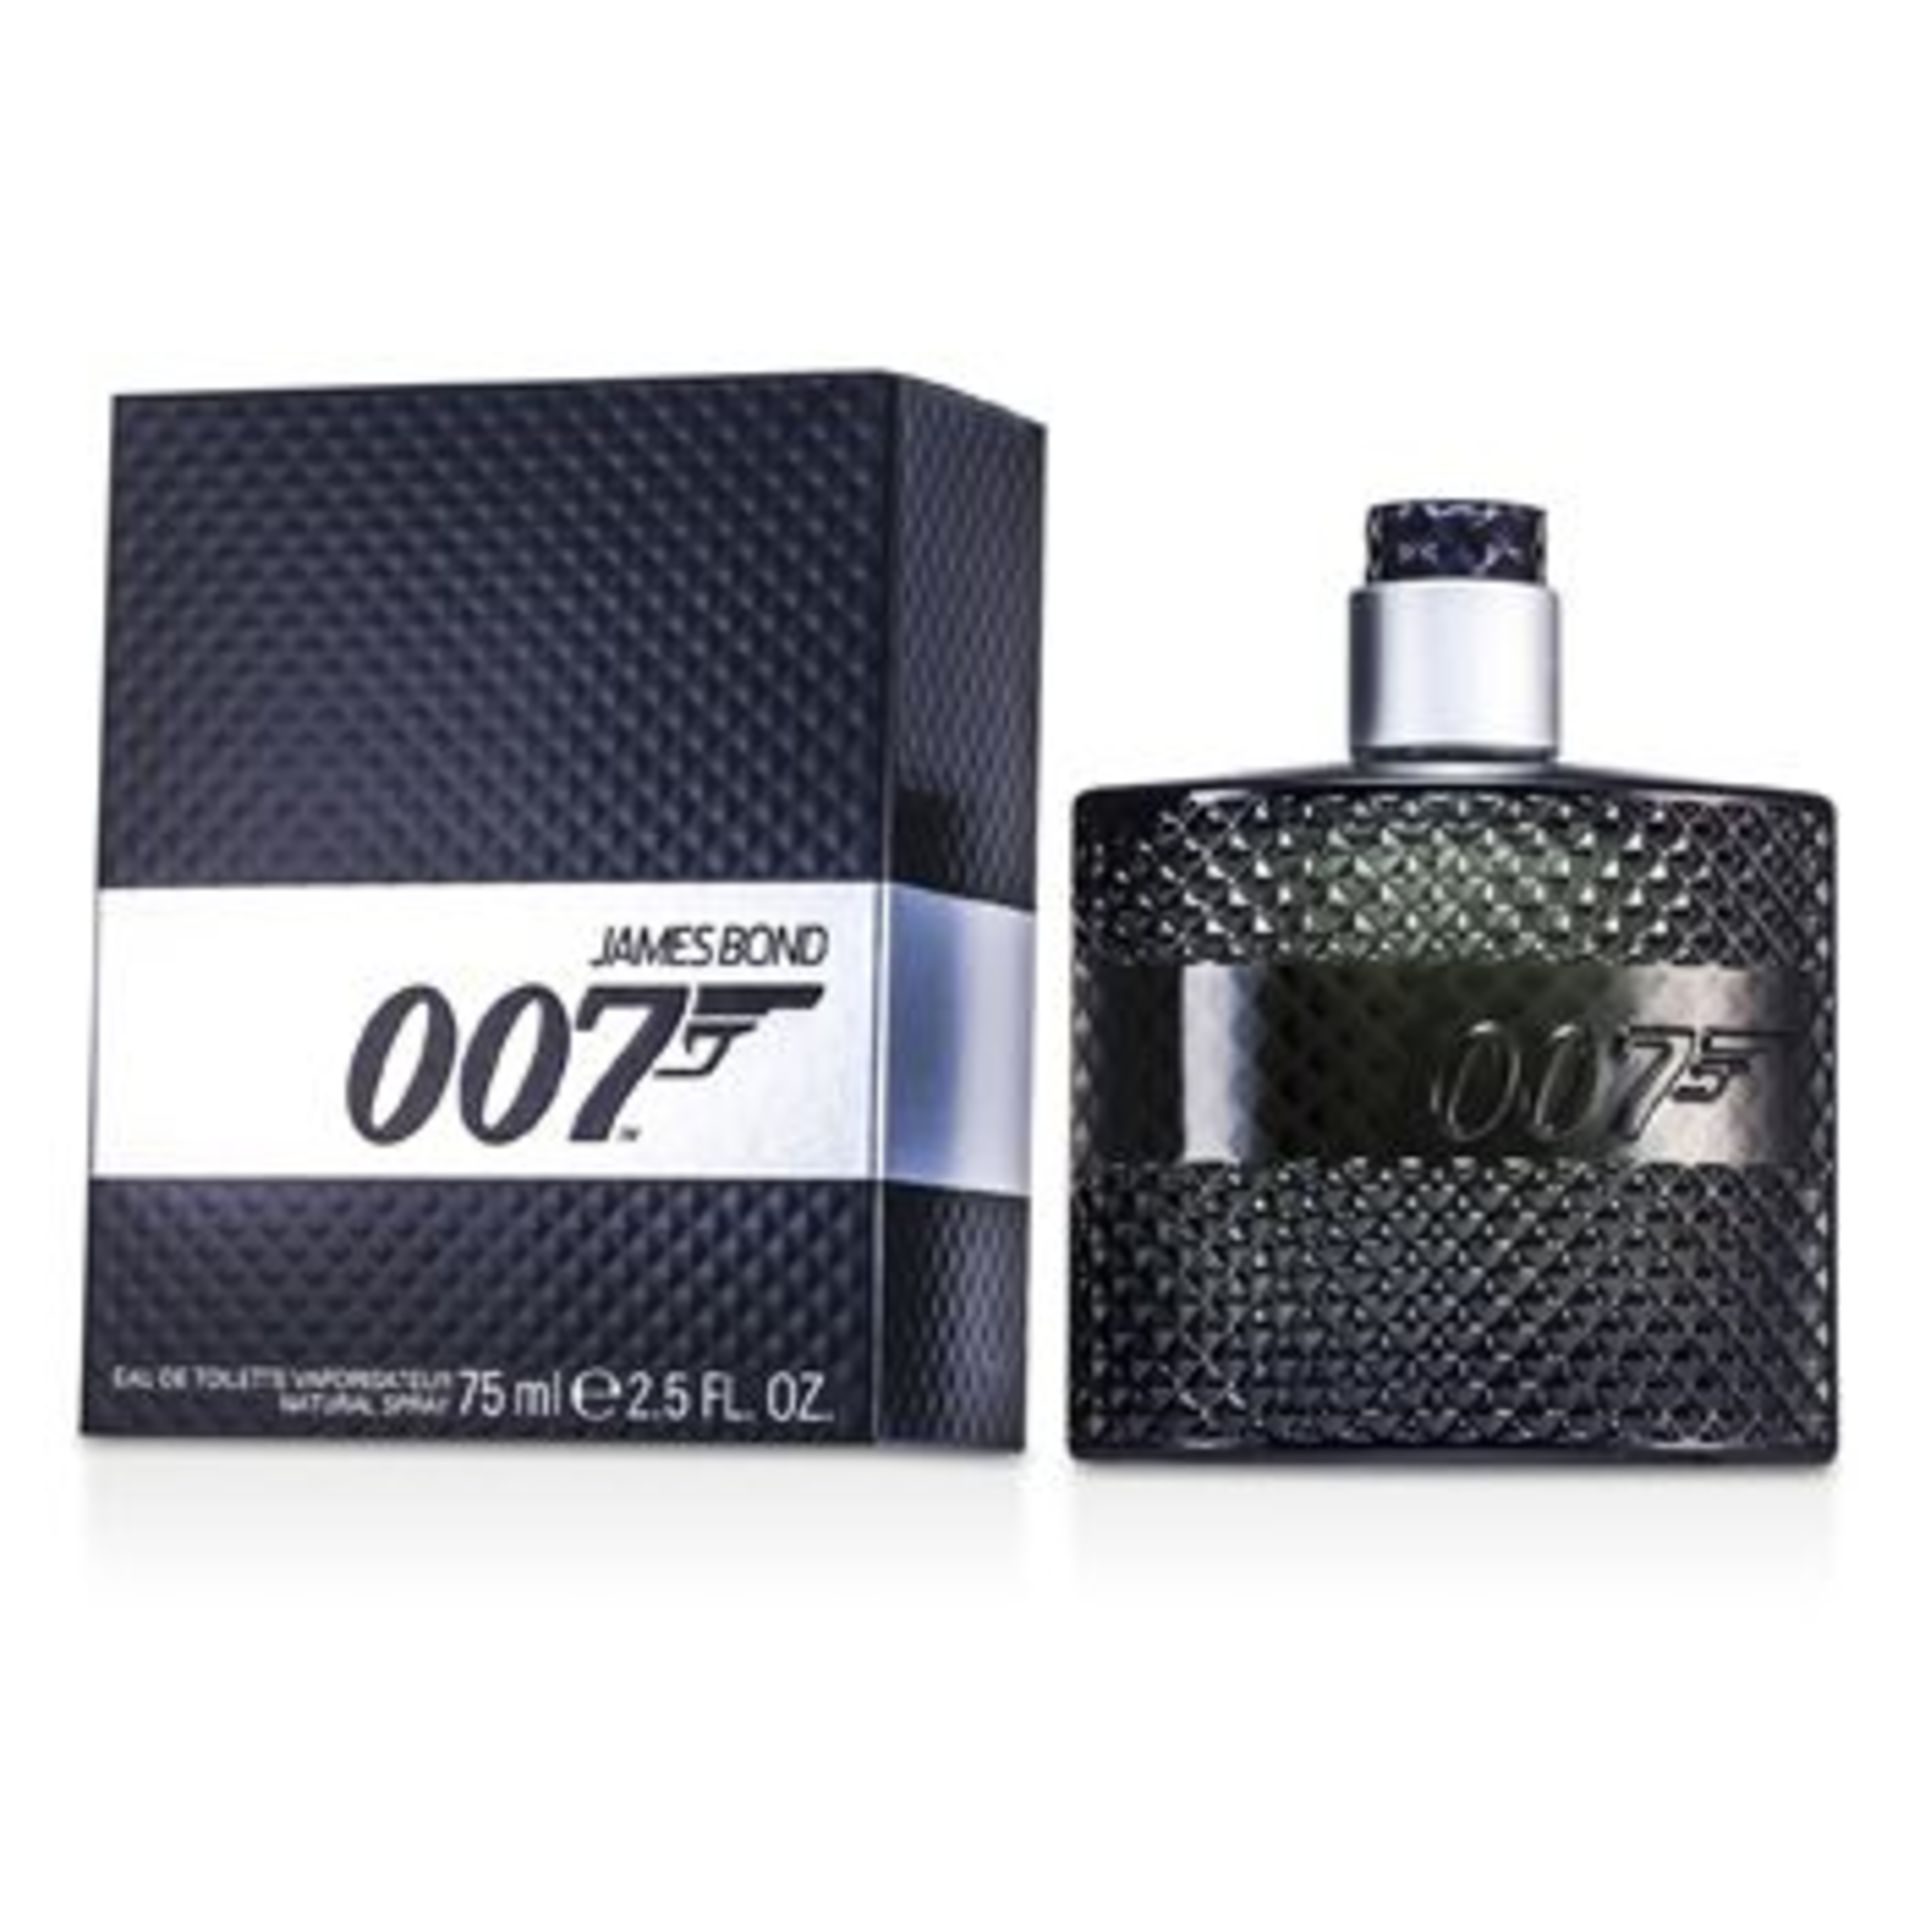 V *TRADE QTY* Brand New James Bond 007 75ml EDT. Debenhams Price £28.80 X 10 YOUR BID PRICE TO BE